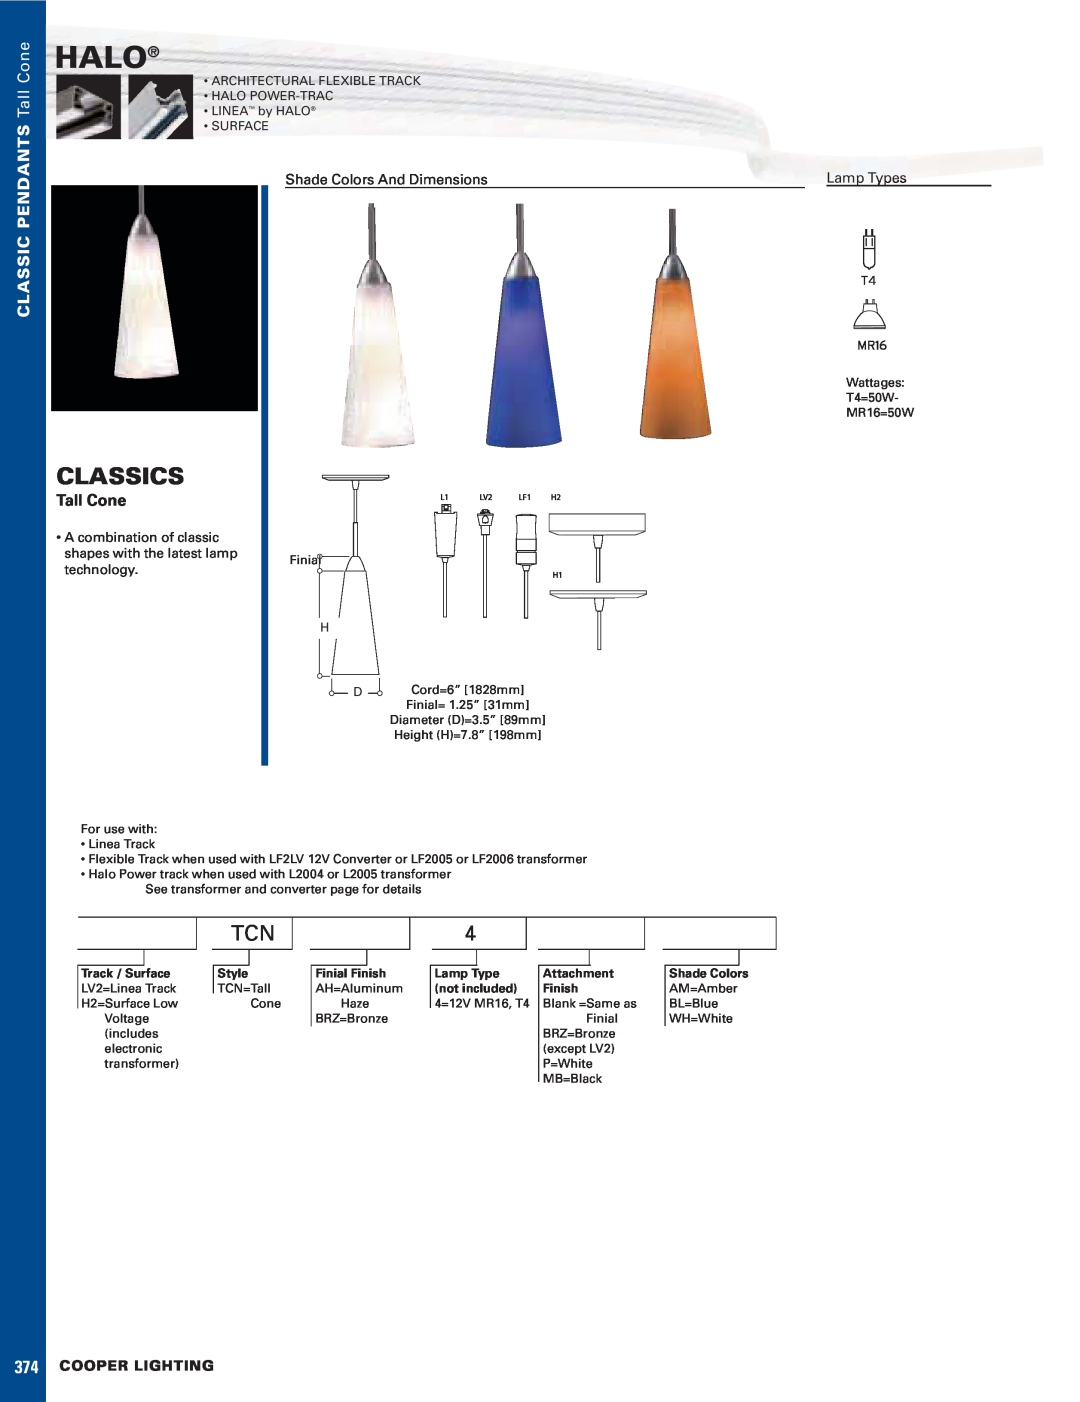 Cooper Lighting Classic Pendant Lighting dimensions Halo, Classics, Tall Cone, Classic Pendants, Lamp Types, Style, Finish 